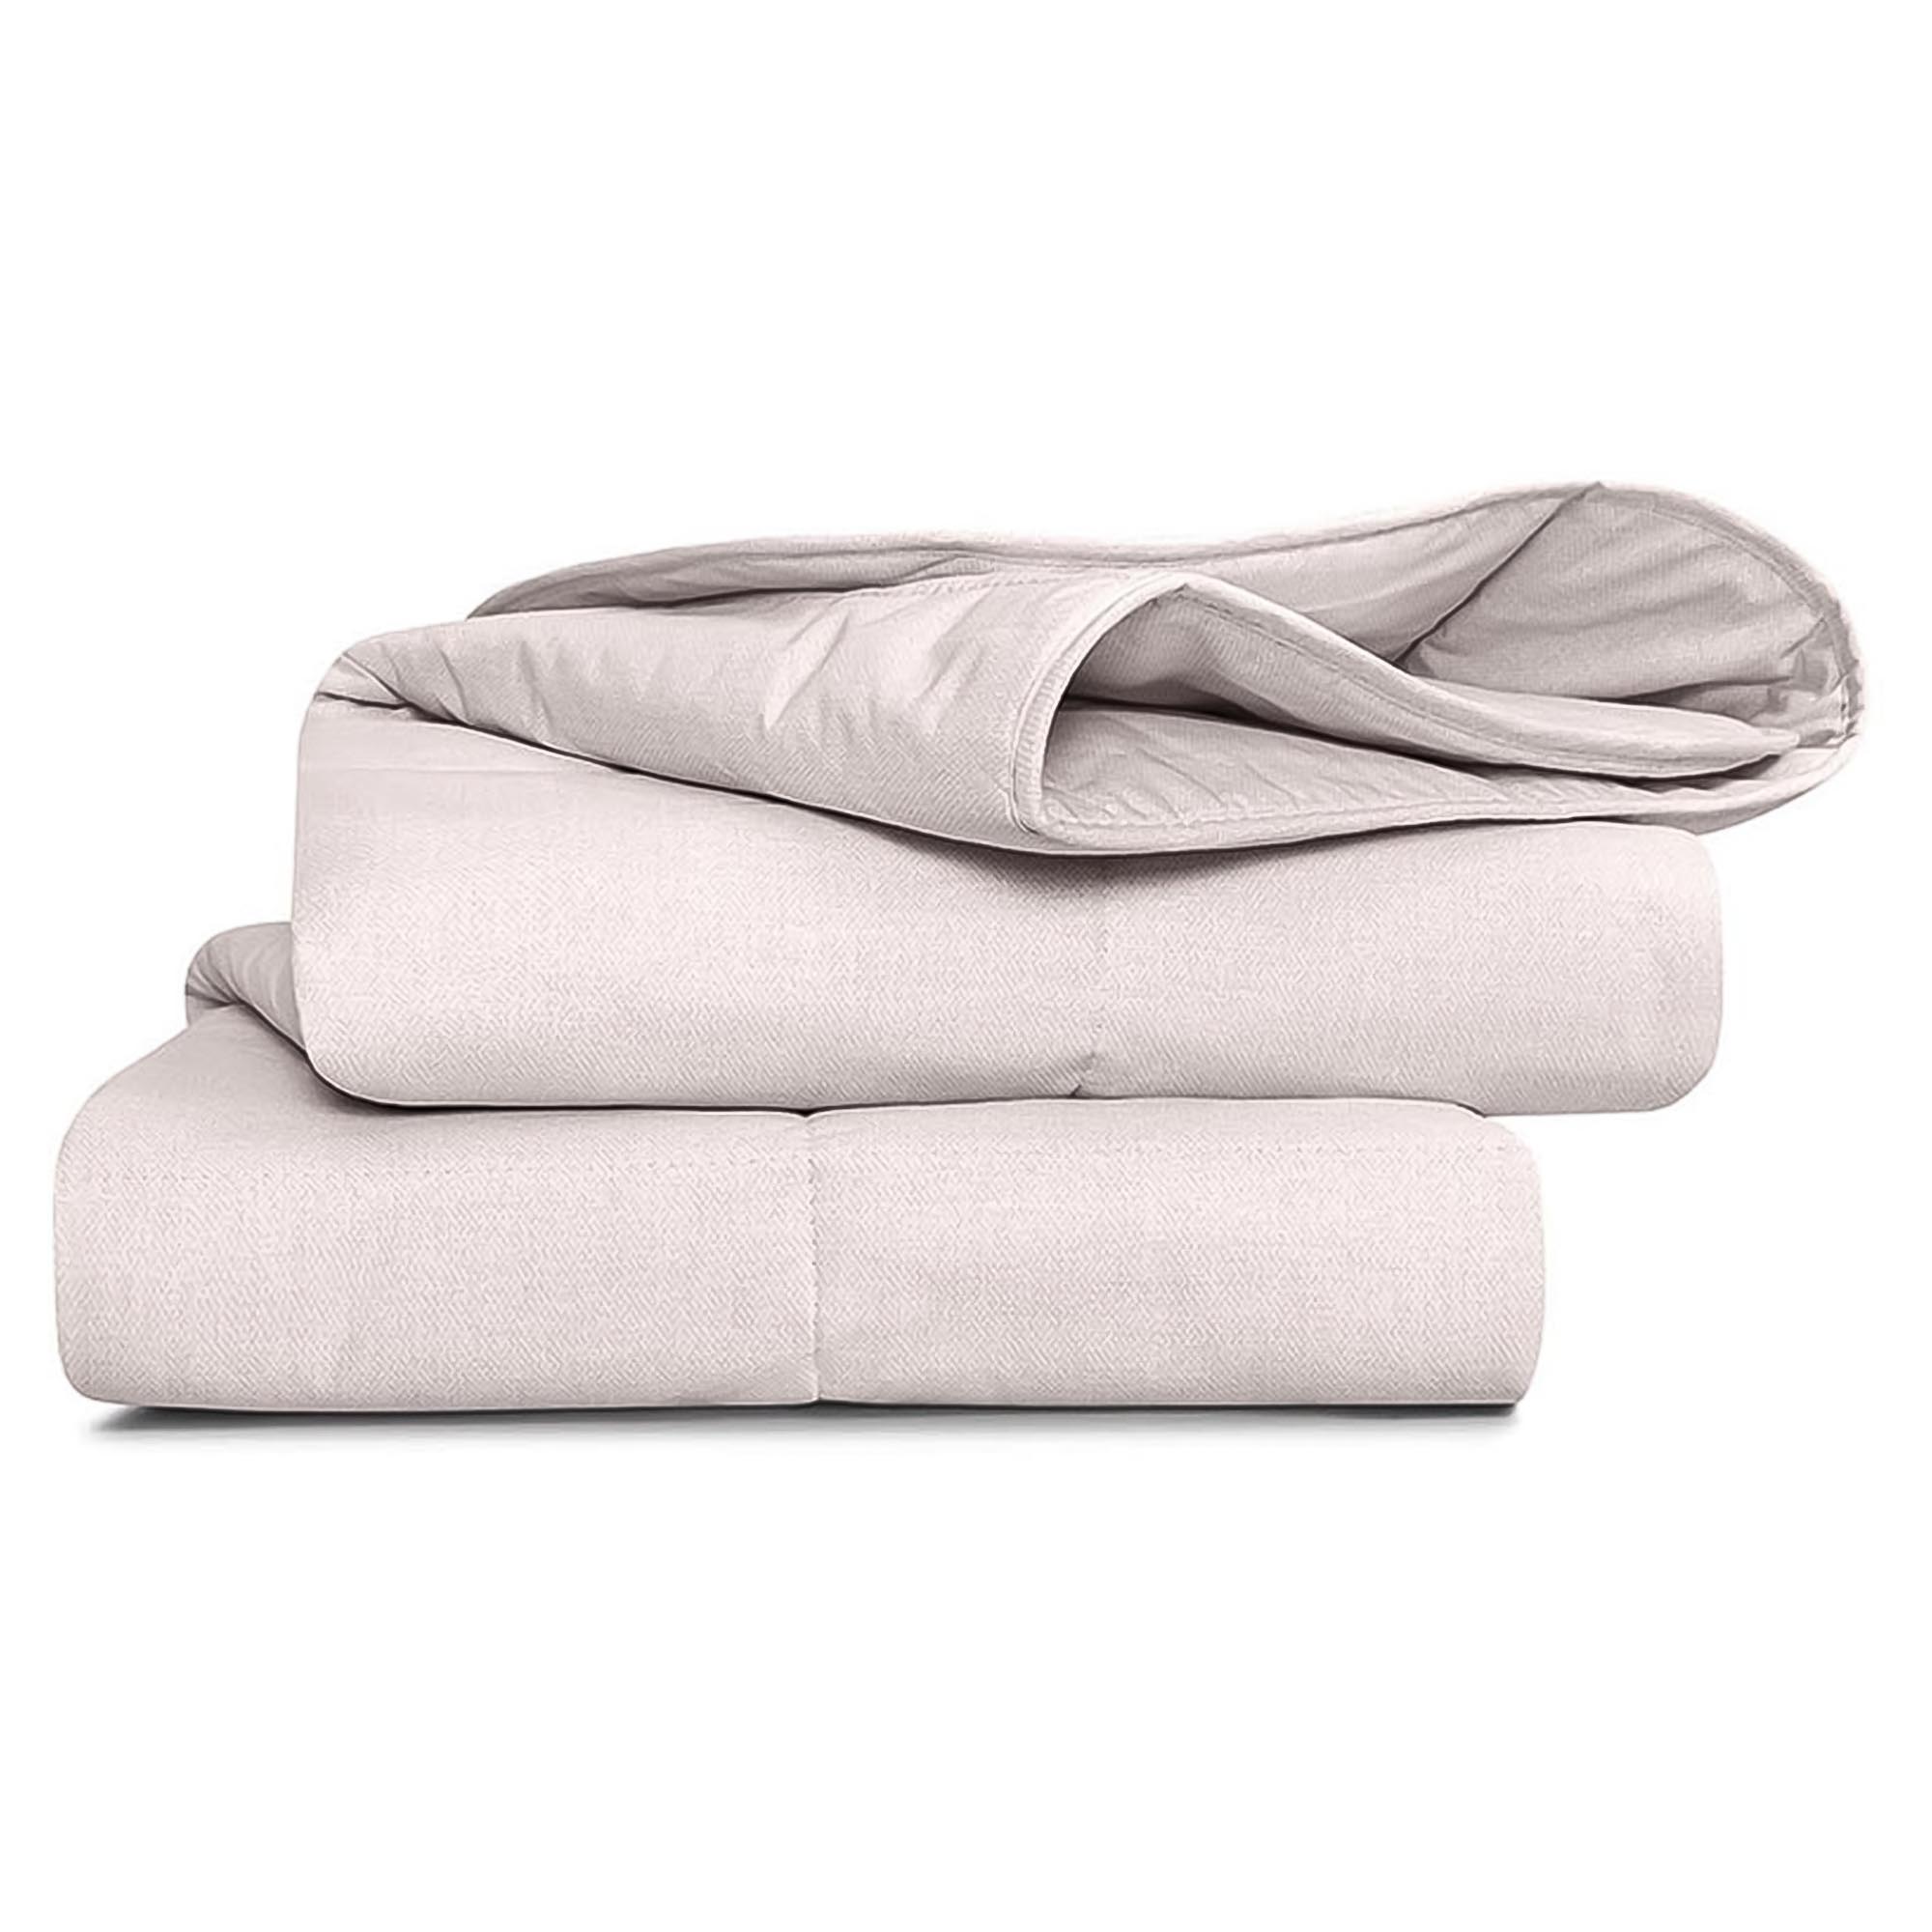 Одеяло Medsleep Sonora белое 140х200 см, цвет белый - фото 1